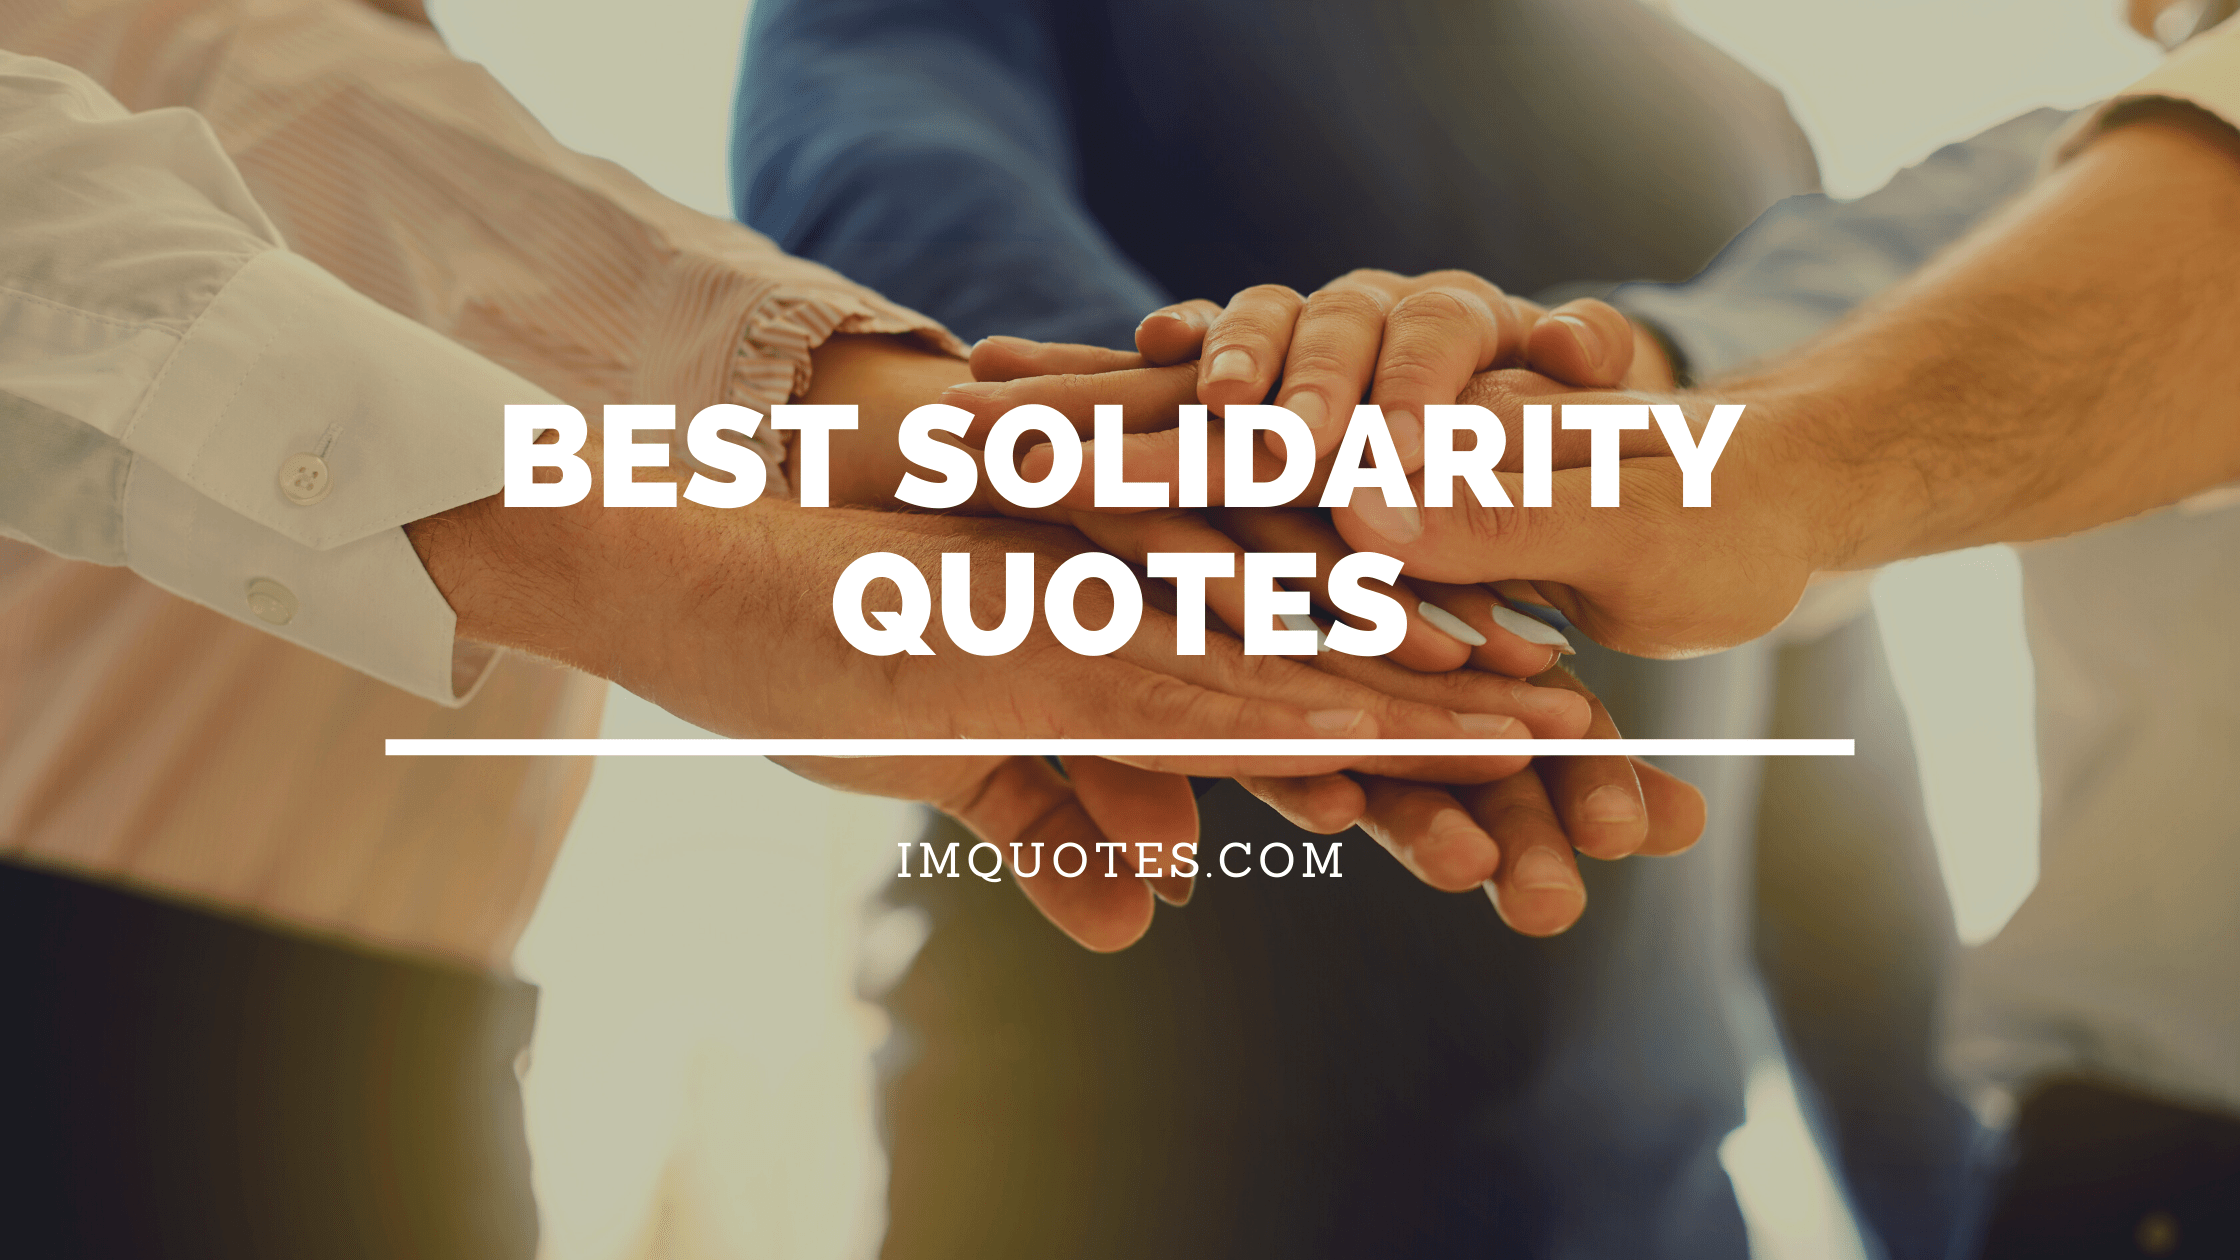 Best Solidarity Quotes